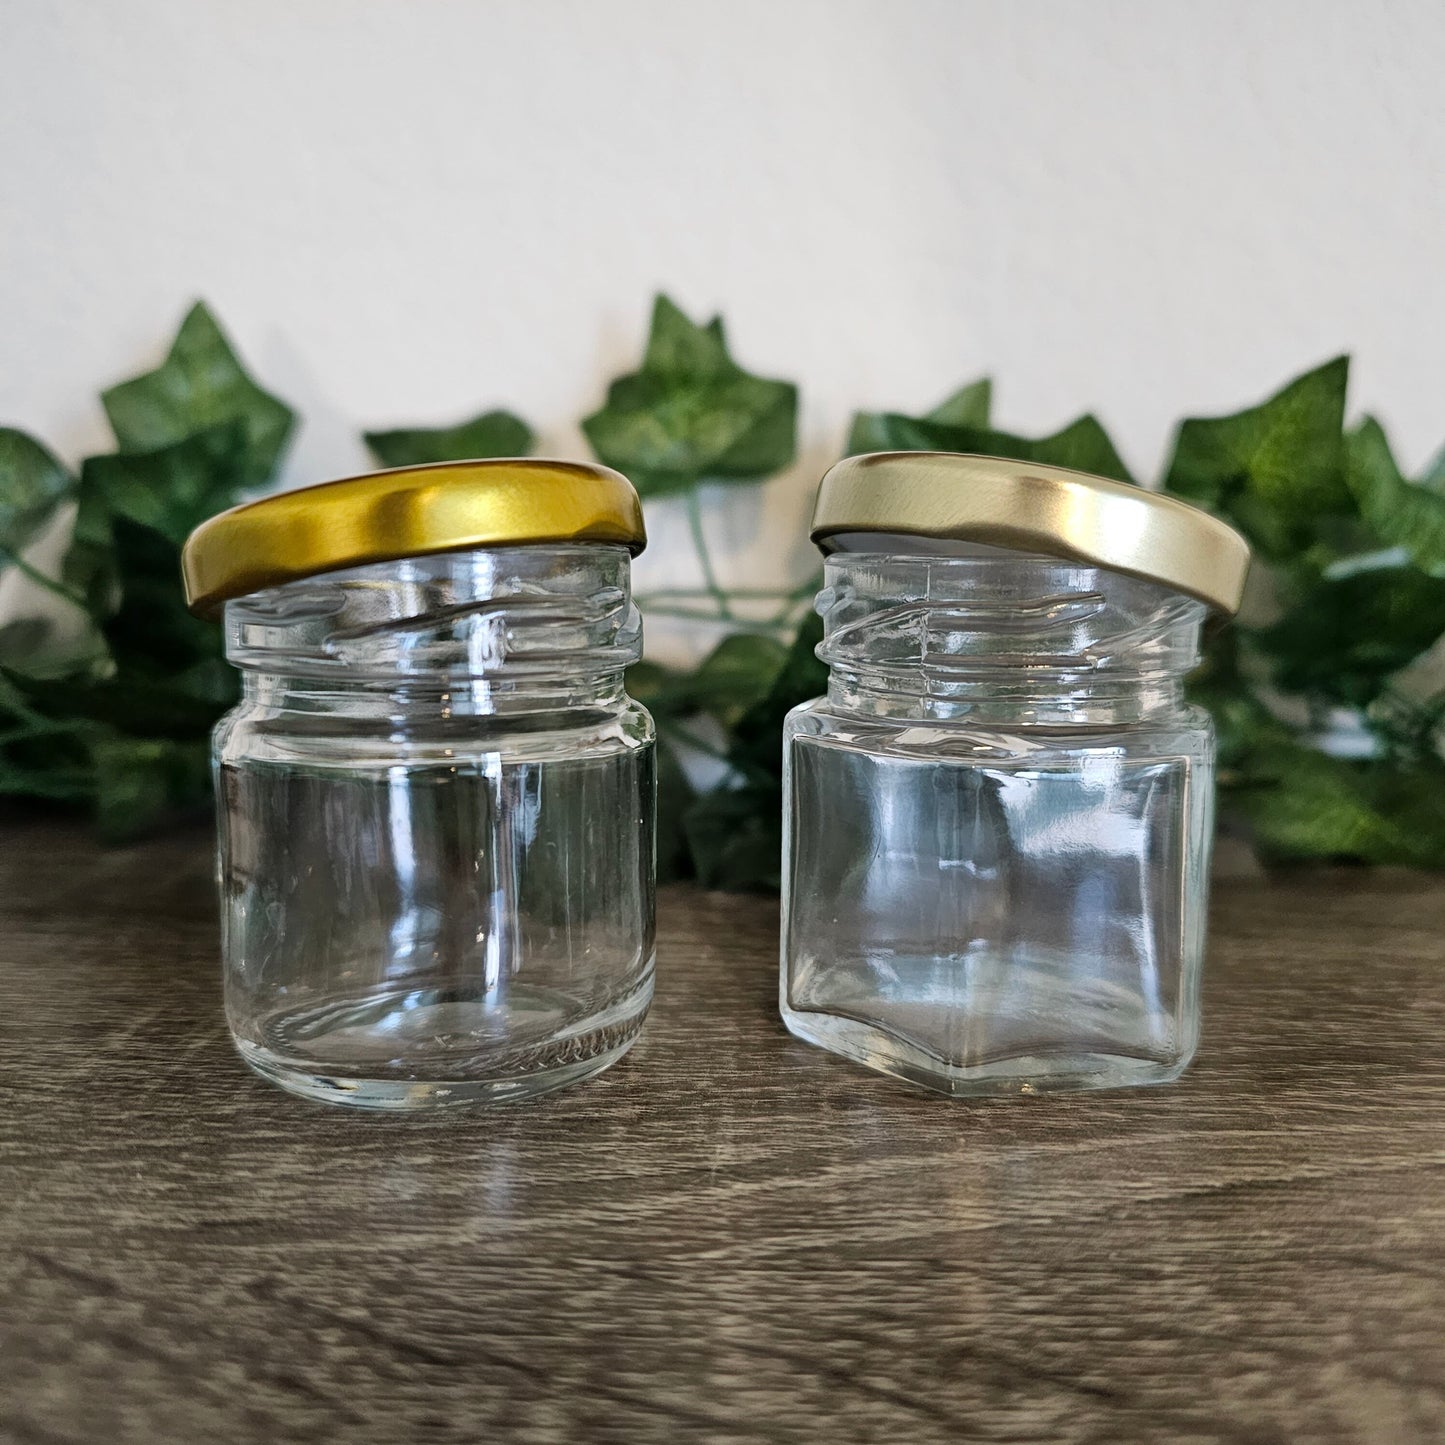 Sweetening Spell Jar - Honey Jar - inspire love, friendship, romance, sweetness - Spell Bottles & Witch Jars